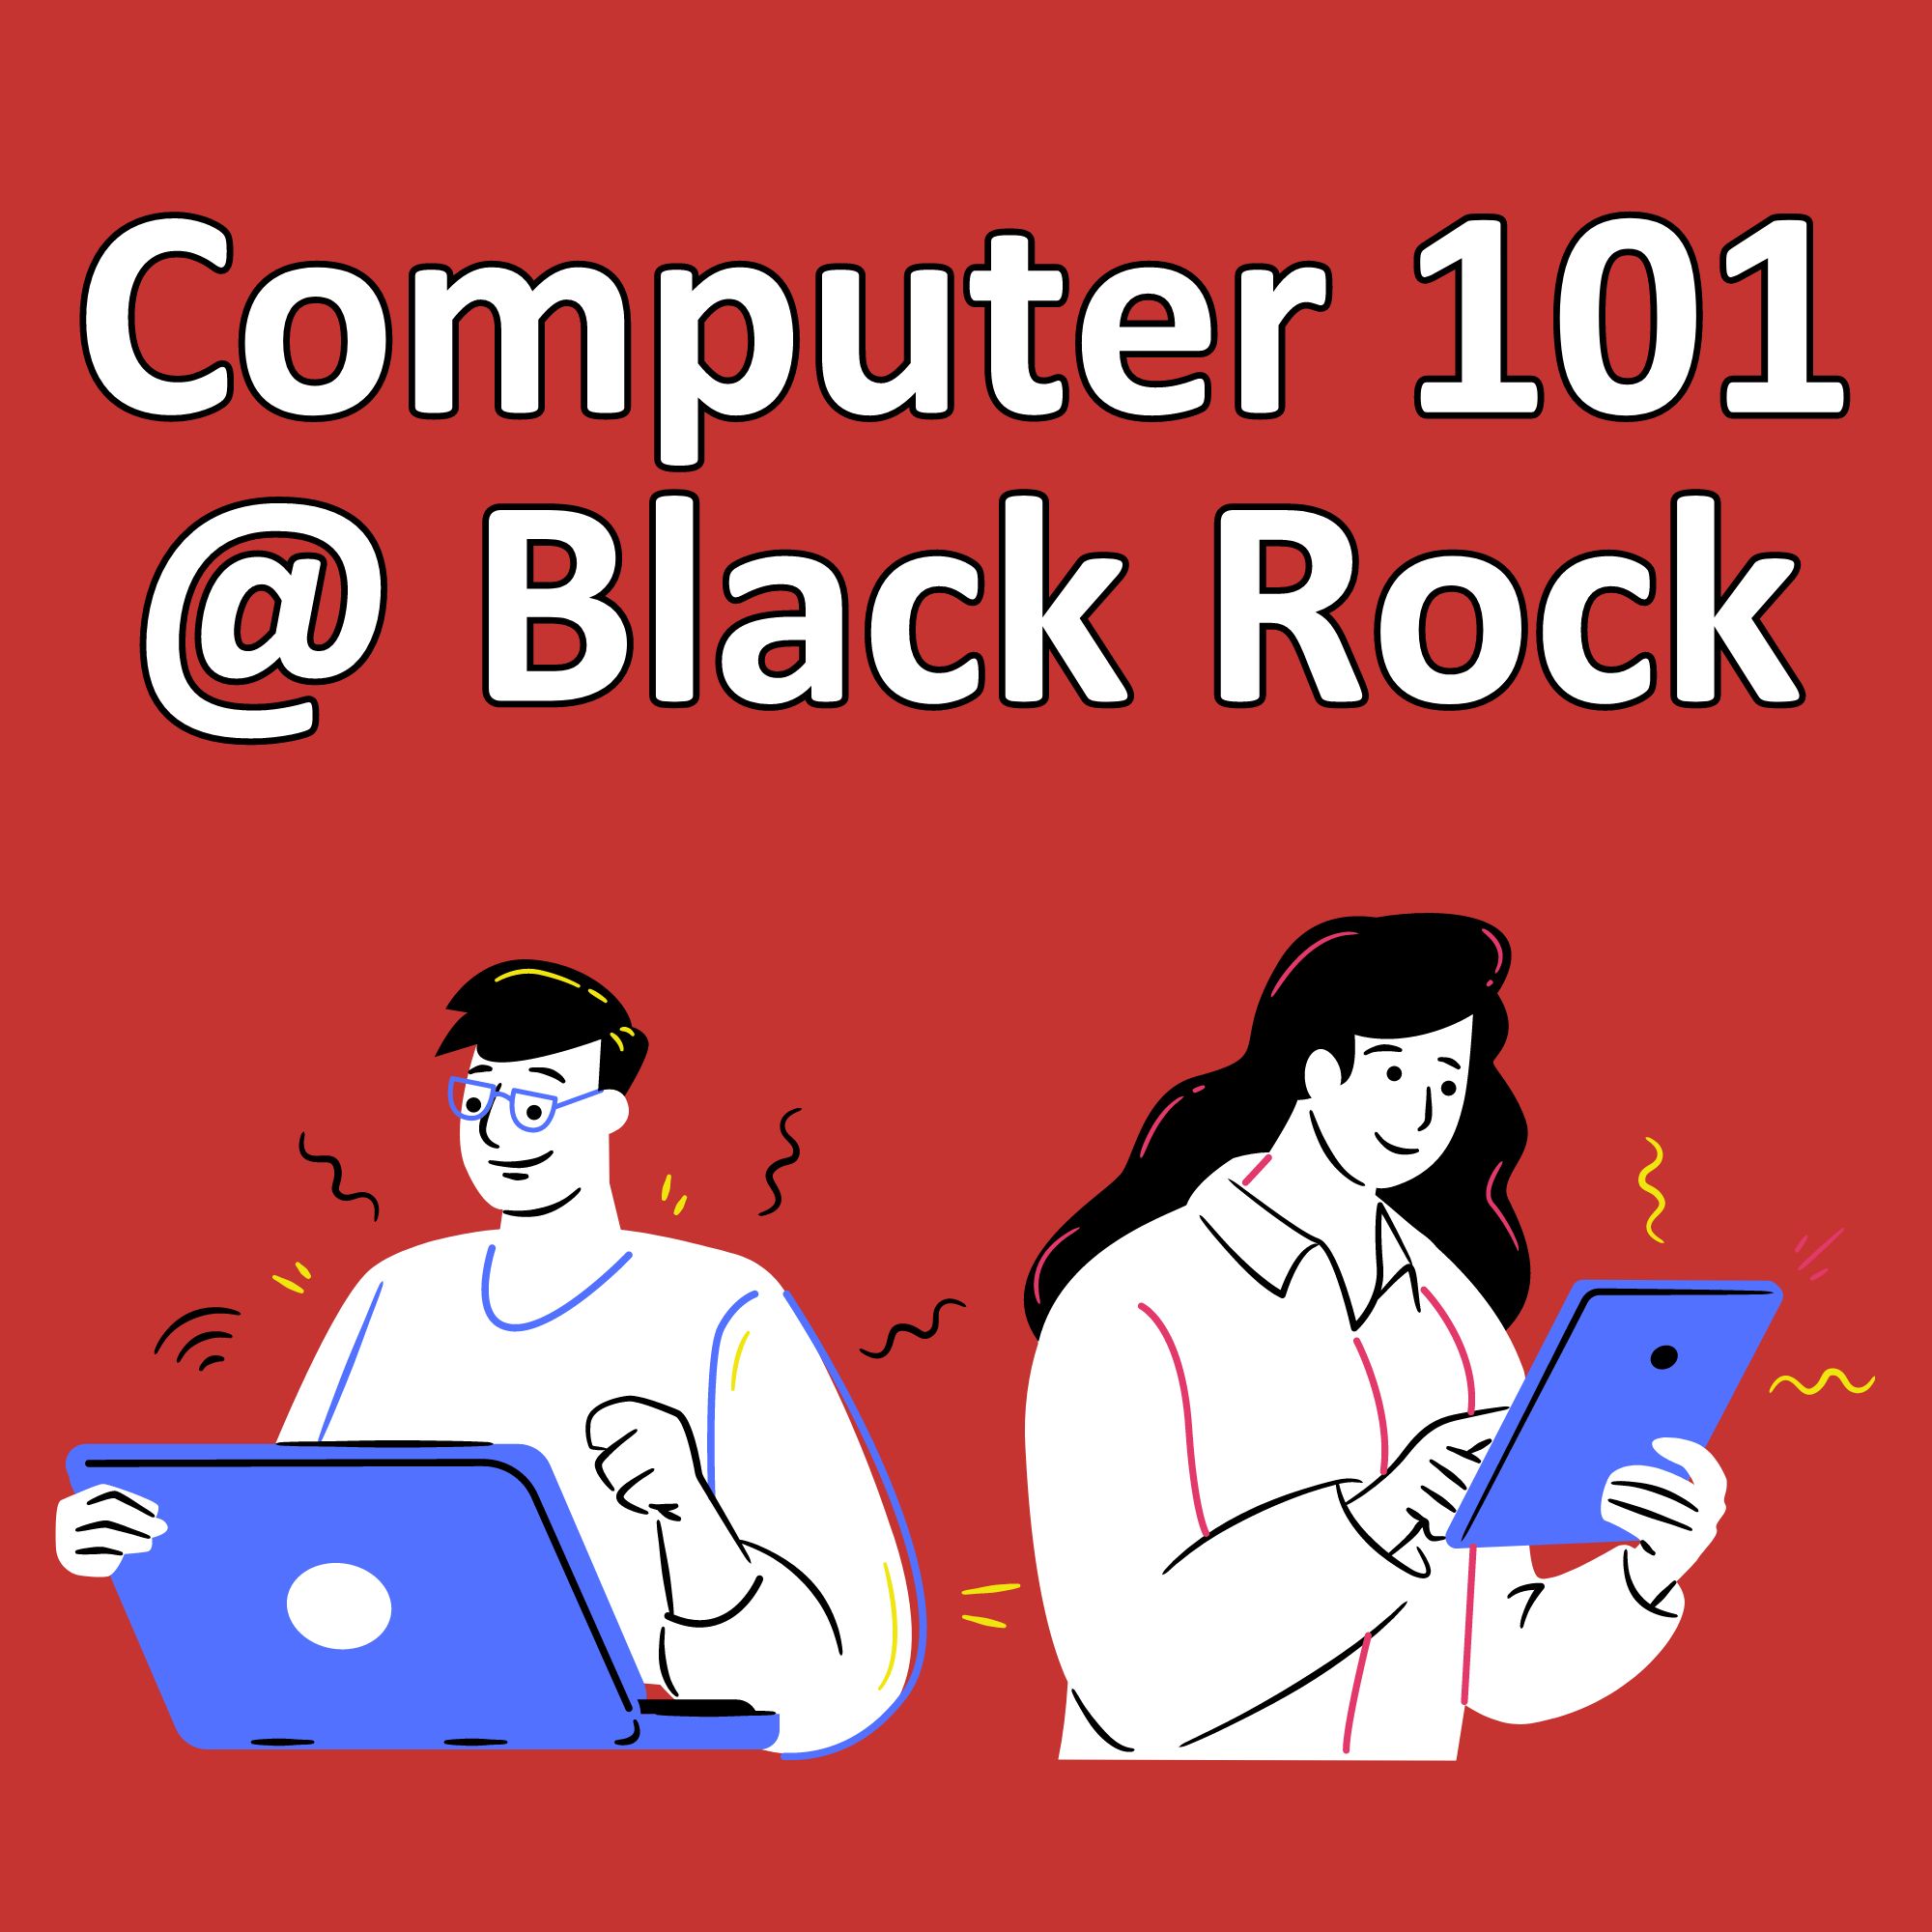 Computer 101 @ Black Rock!